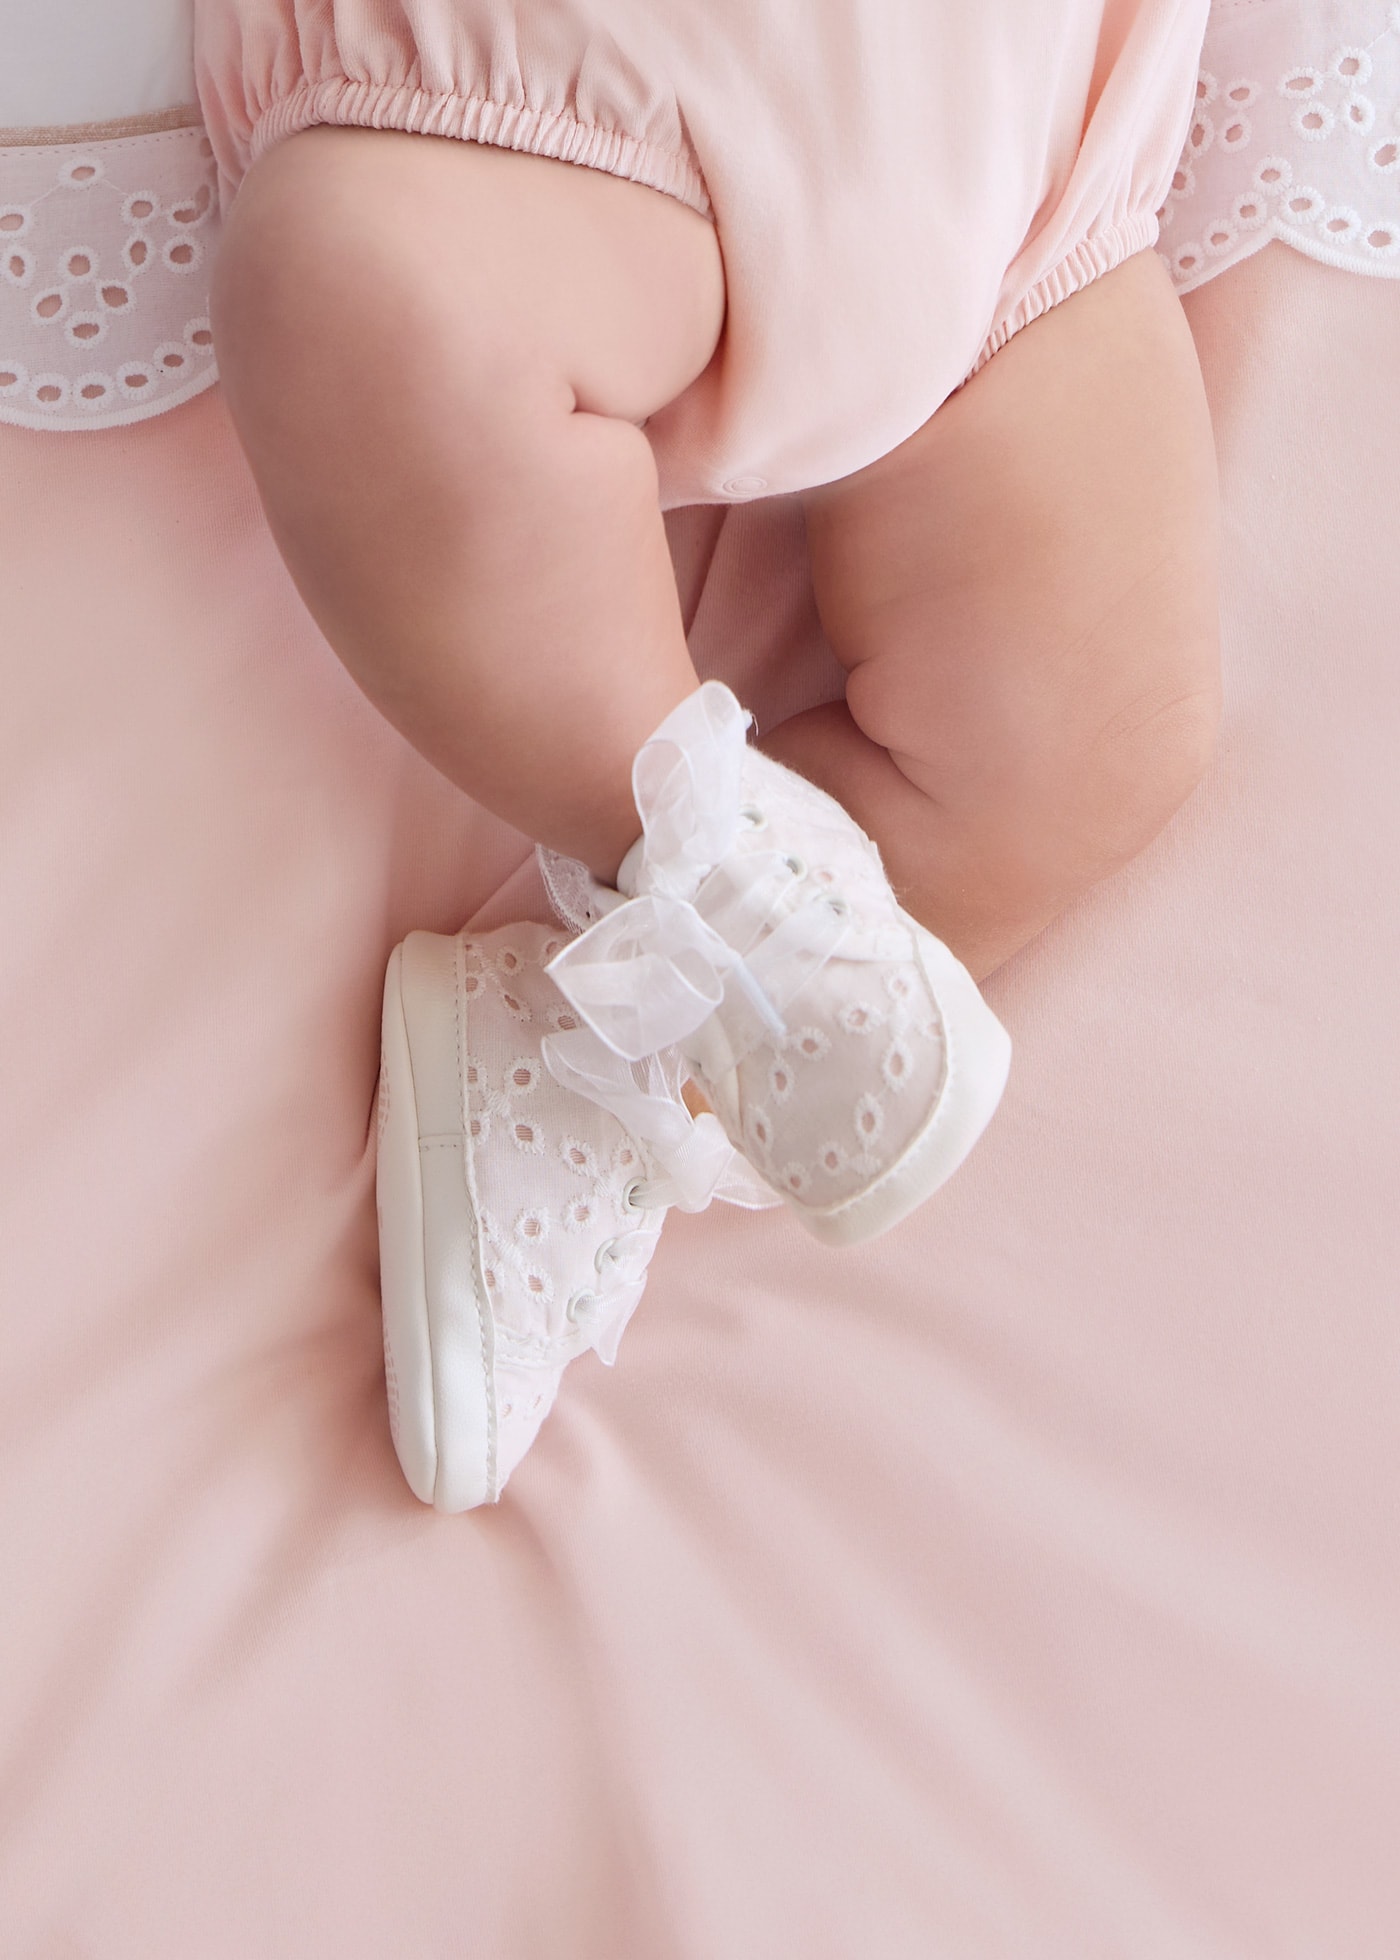 Newborn openwork shoes